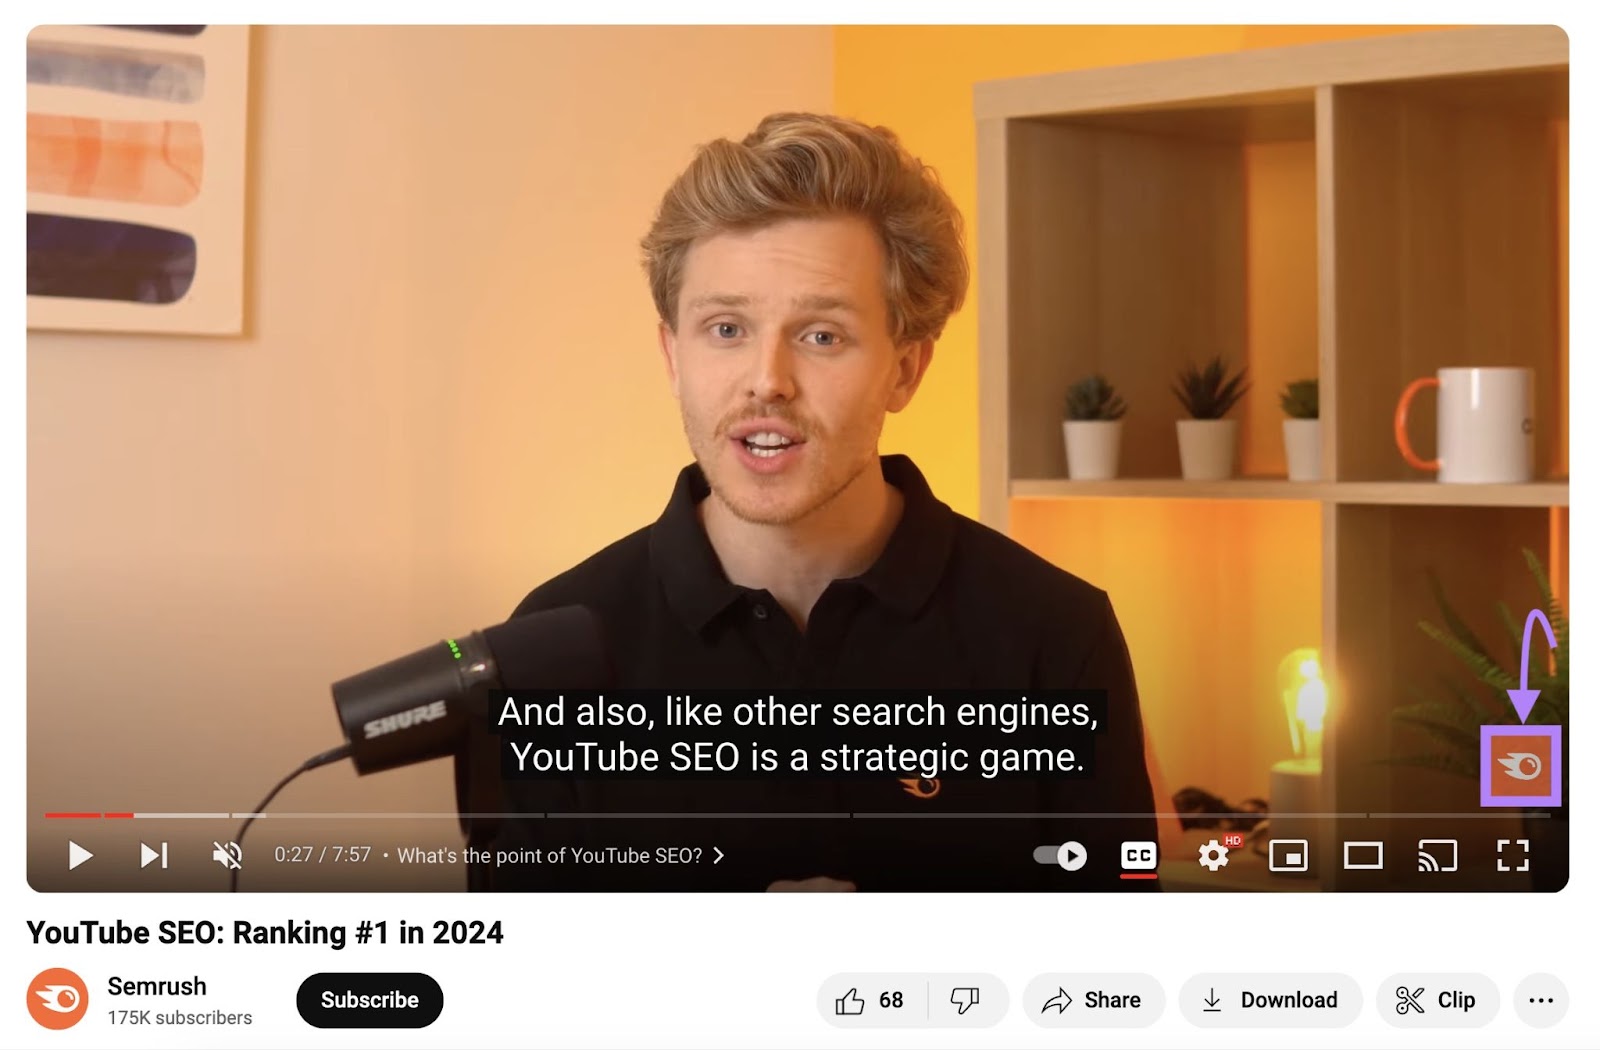 Semrush's YouTube video titled "YouTube SEO: Ranking #1 in 2024" with Semrush brand watermark in the bottom right corner